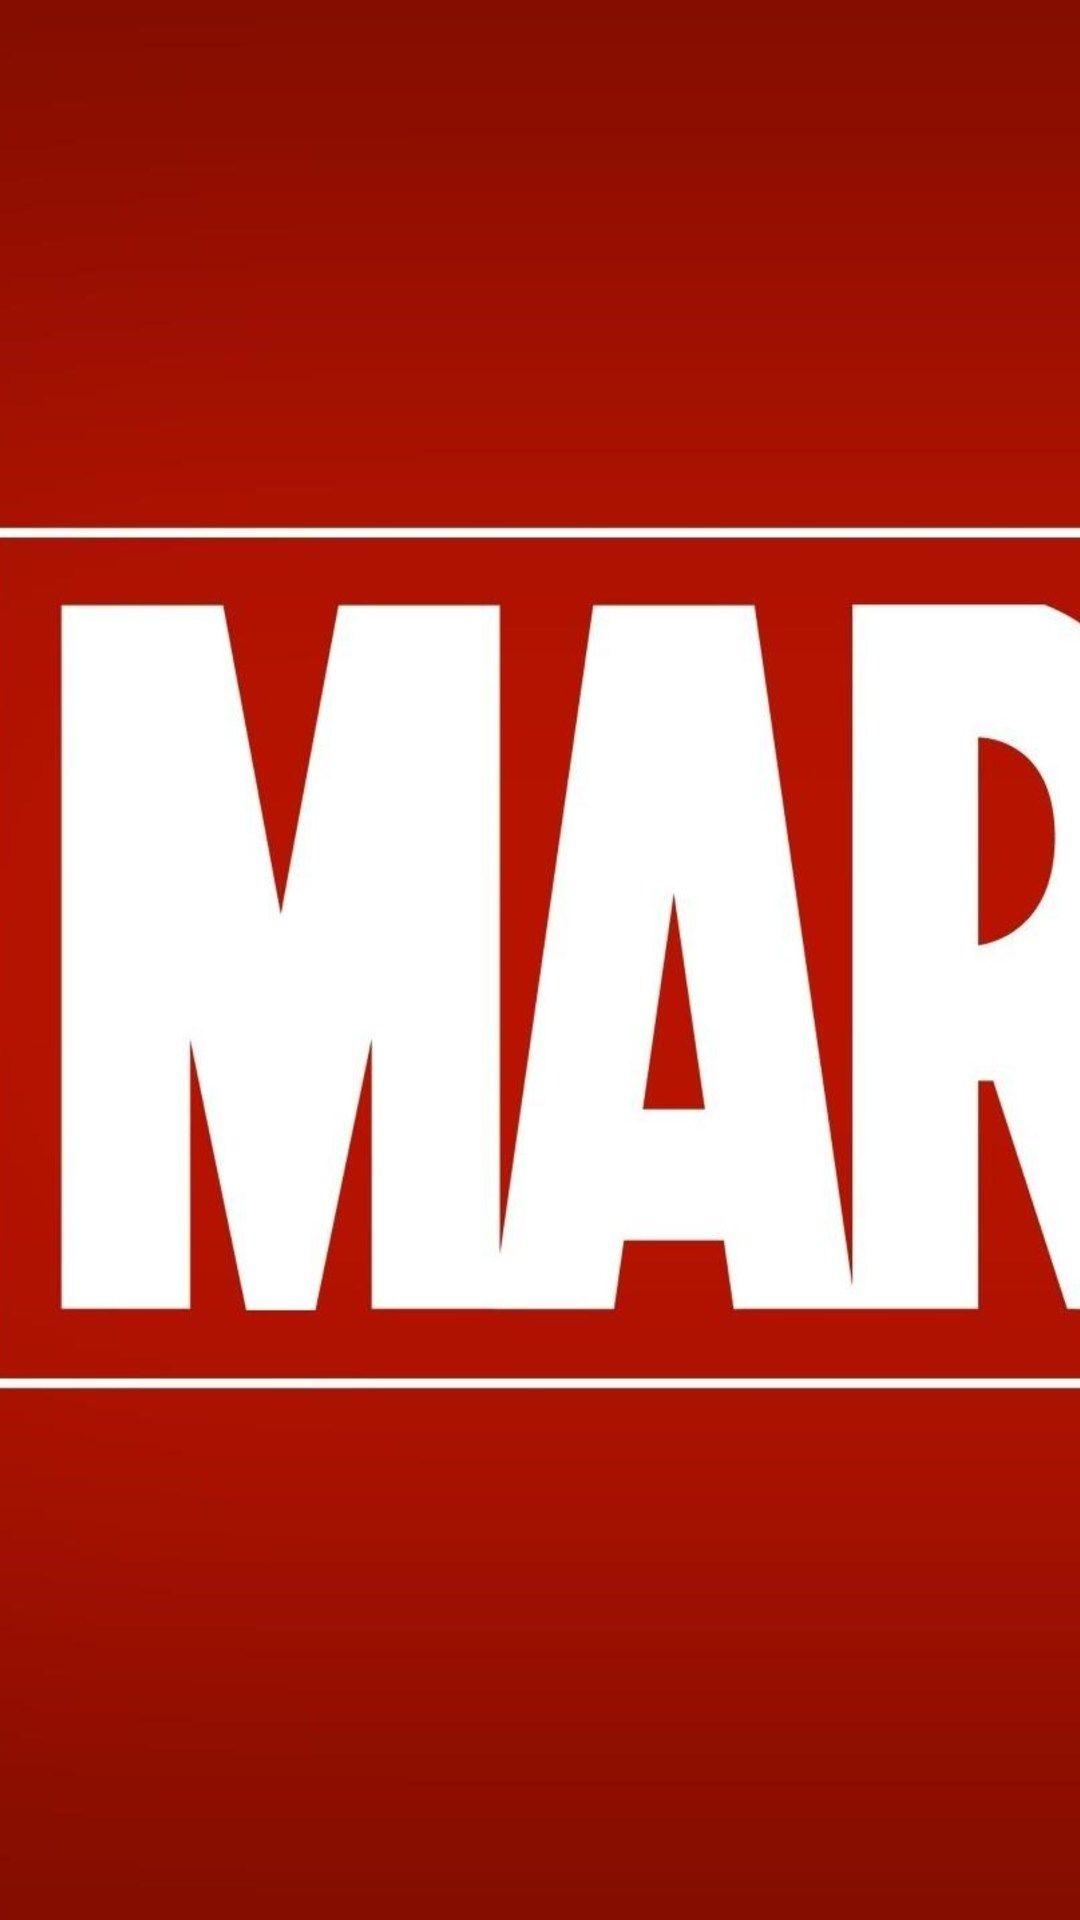 Wallpaper Marvel Logo Wallpapers